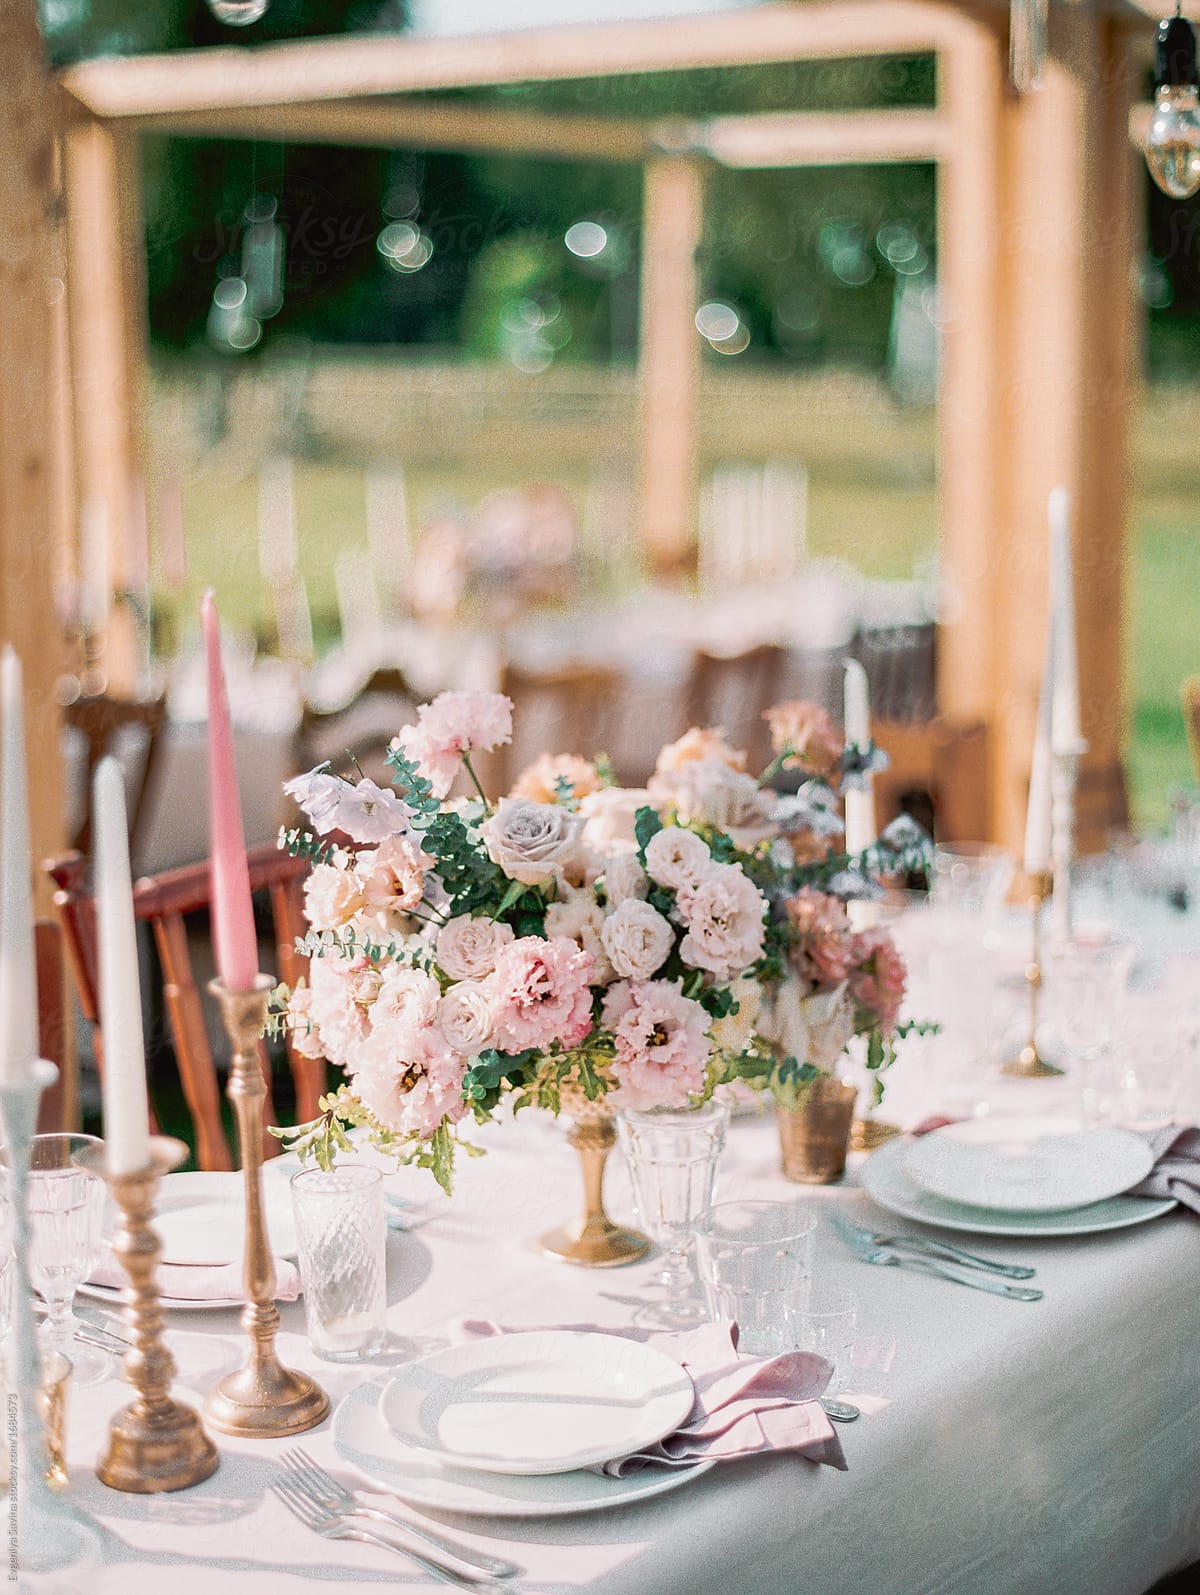 A table set ready for a wedding